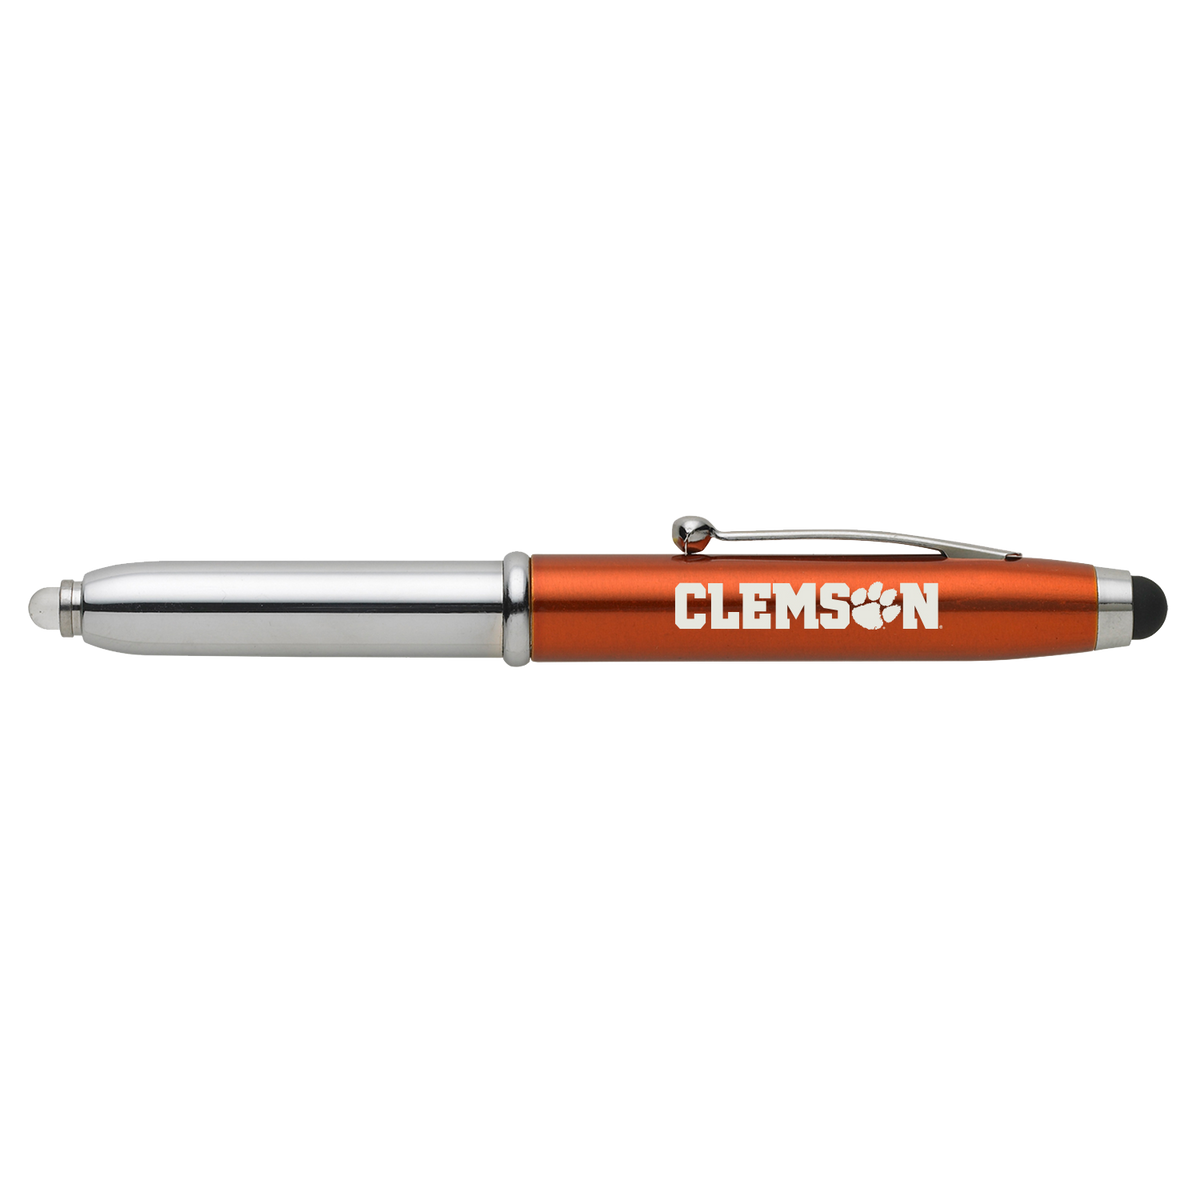 Clemson Triple Function LED Stylus Pen